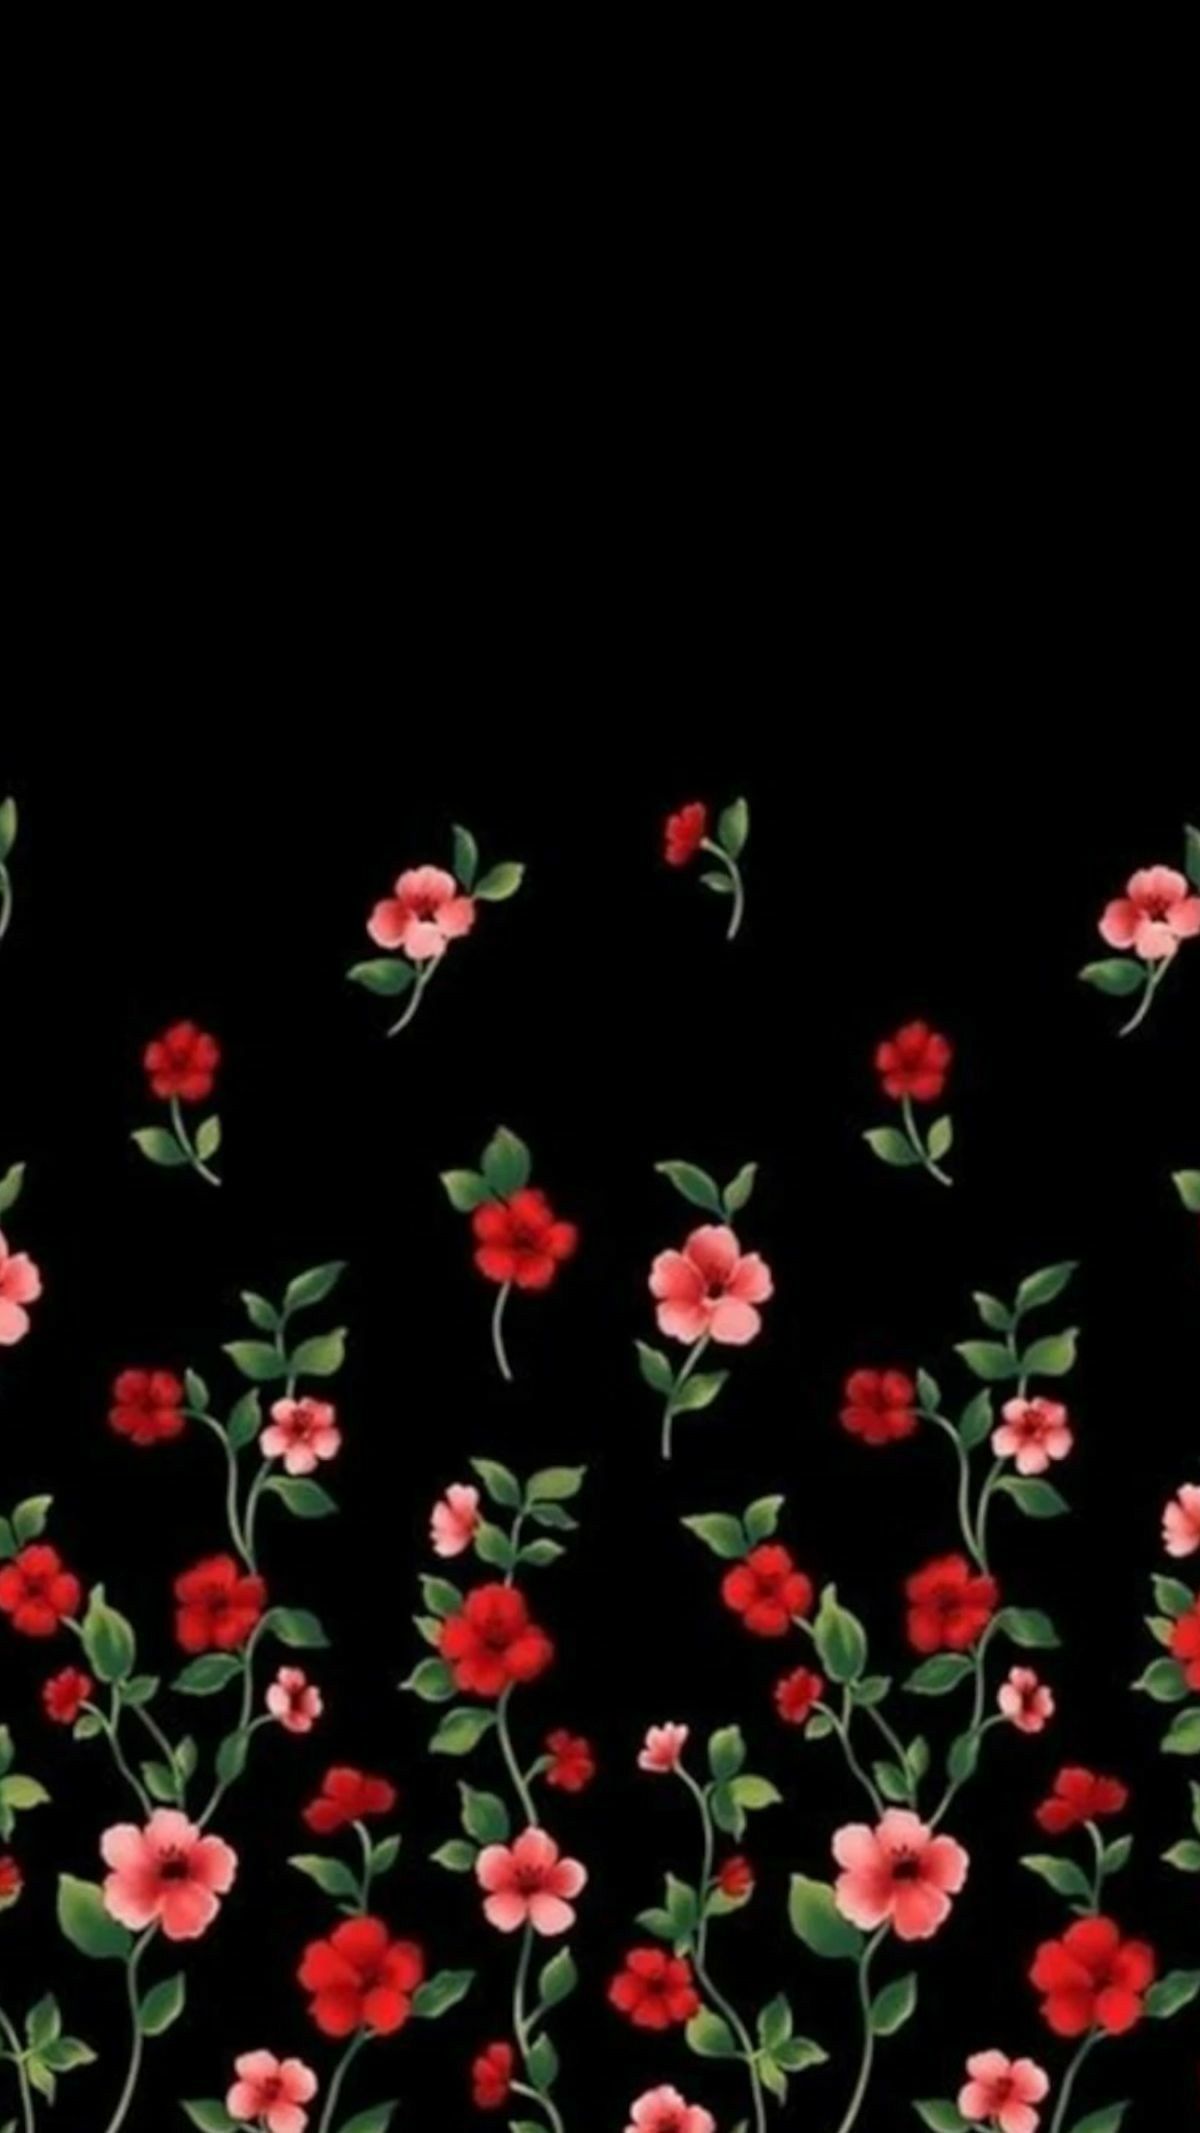 AMOLED) Floral Wallpaper Background Lock Screen. Black Flowers